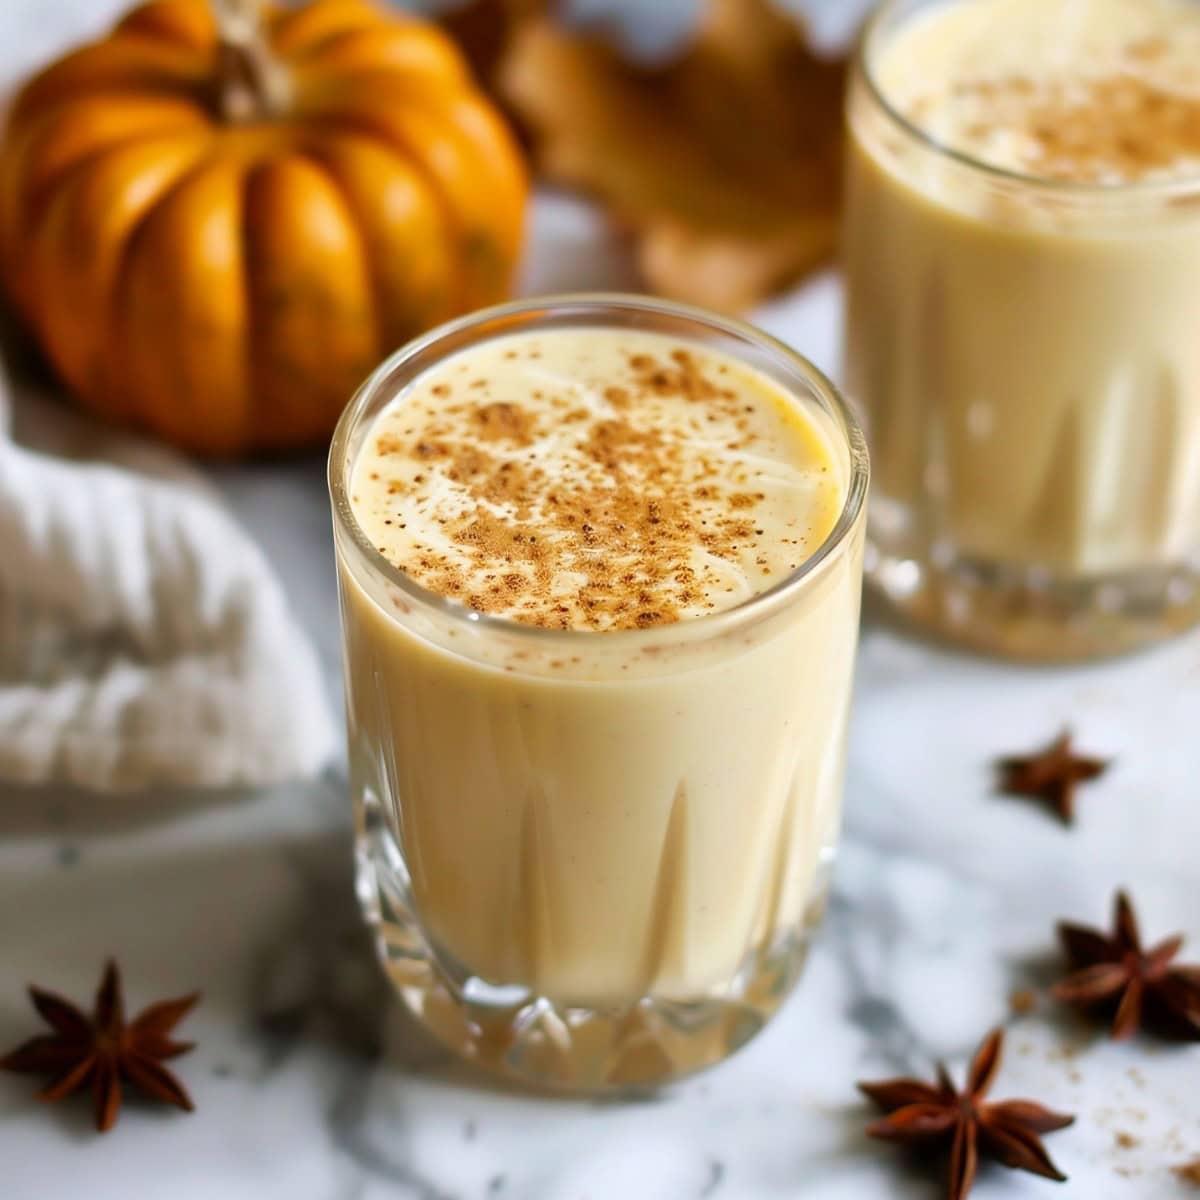 Creamy pumpkin eggnog, a seasonal twist on the classic holiday drink, with a hint of nutmeg spice